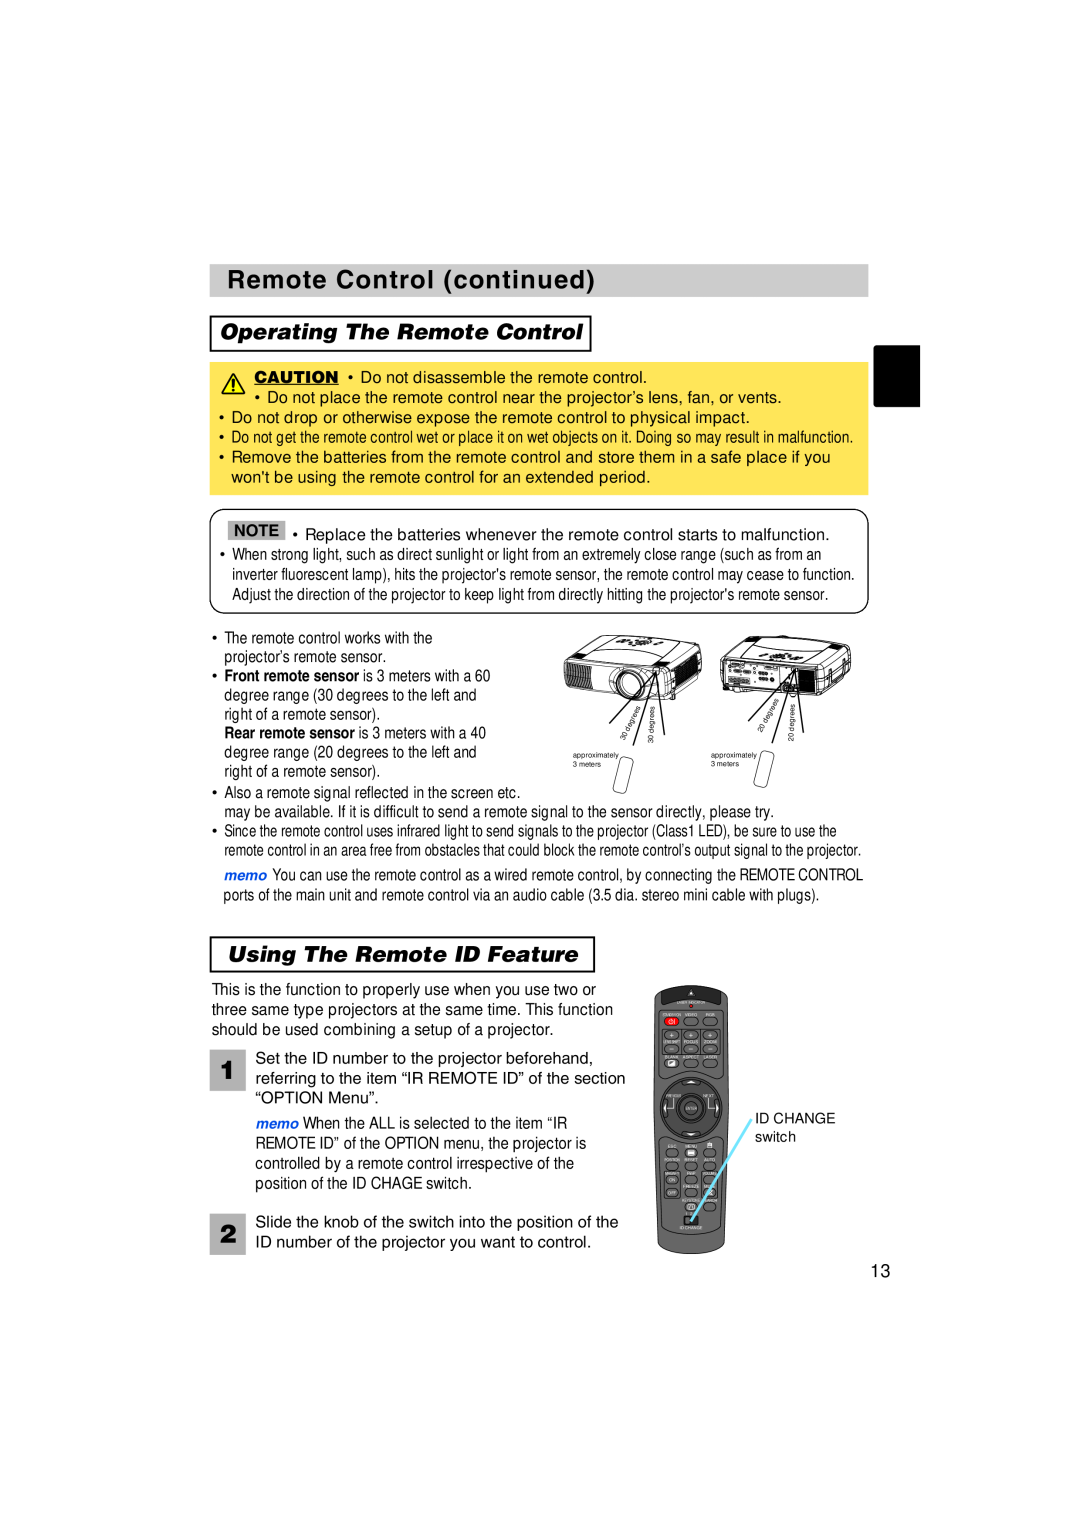 BOXLIGHT MP-57i, MP-58i user manual Remote Control continued, Operating The Remote Control, Using The Remote ID Feature 